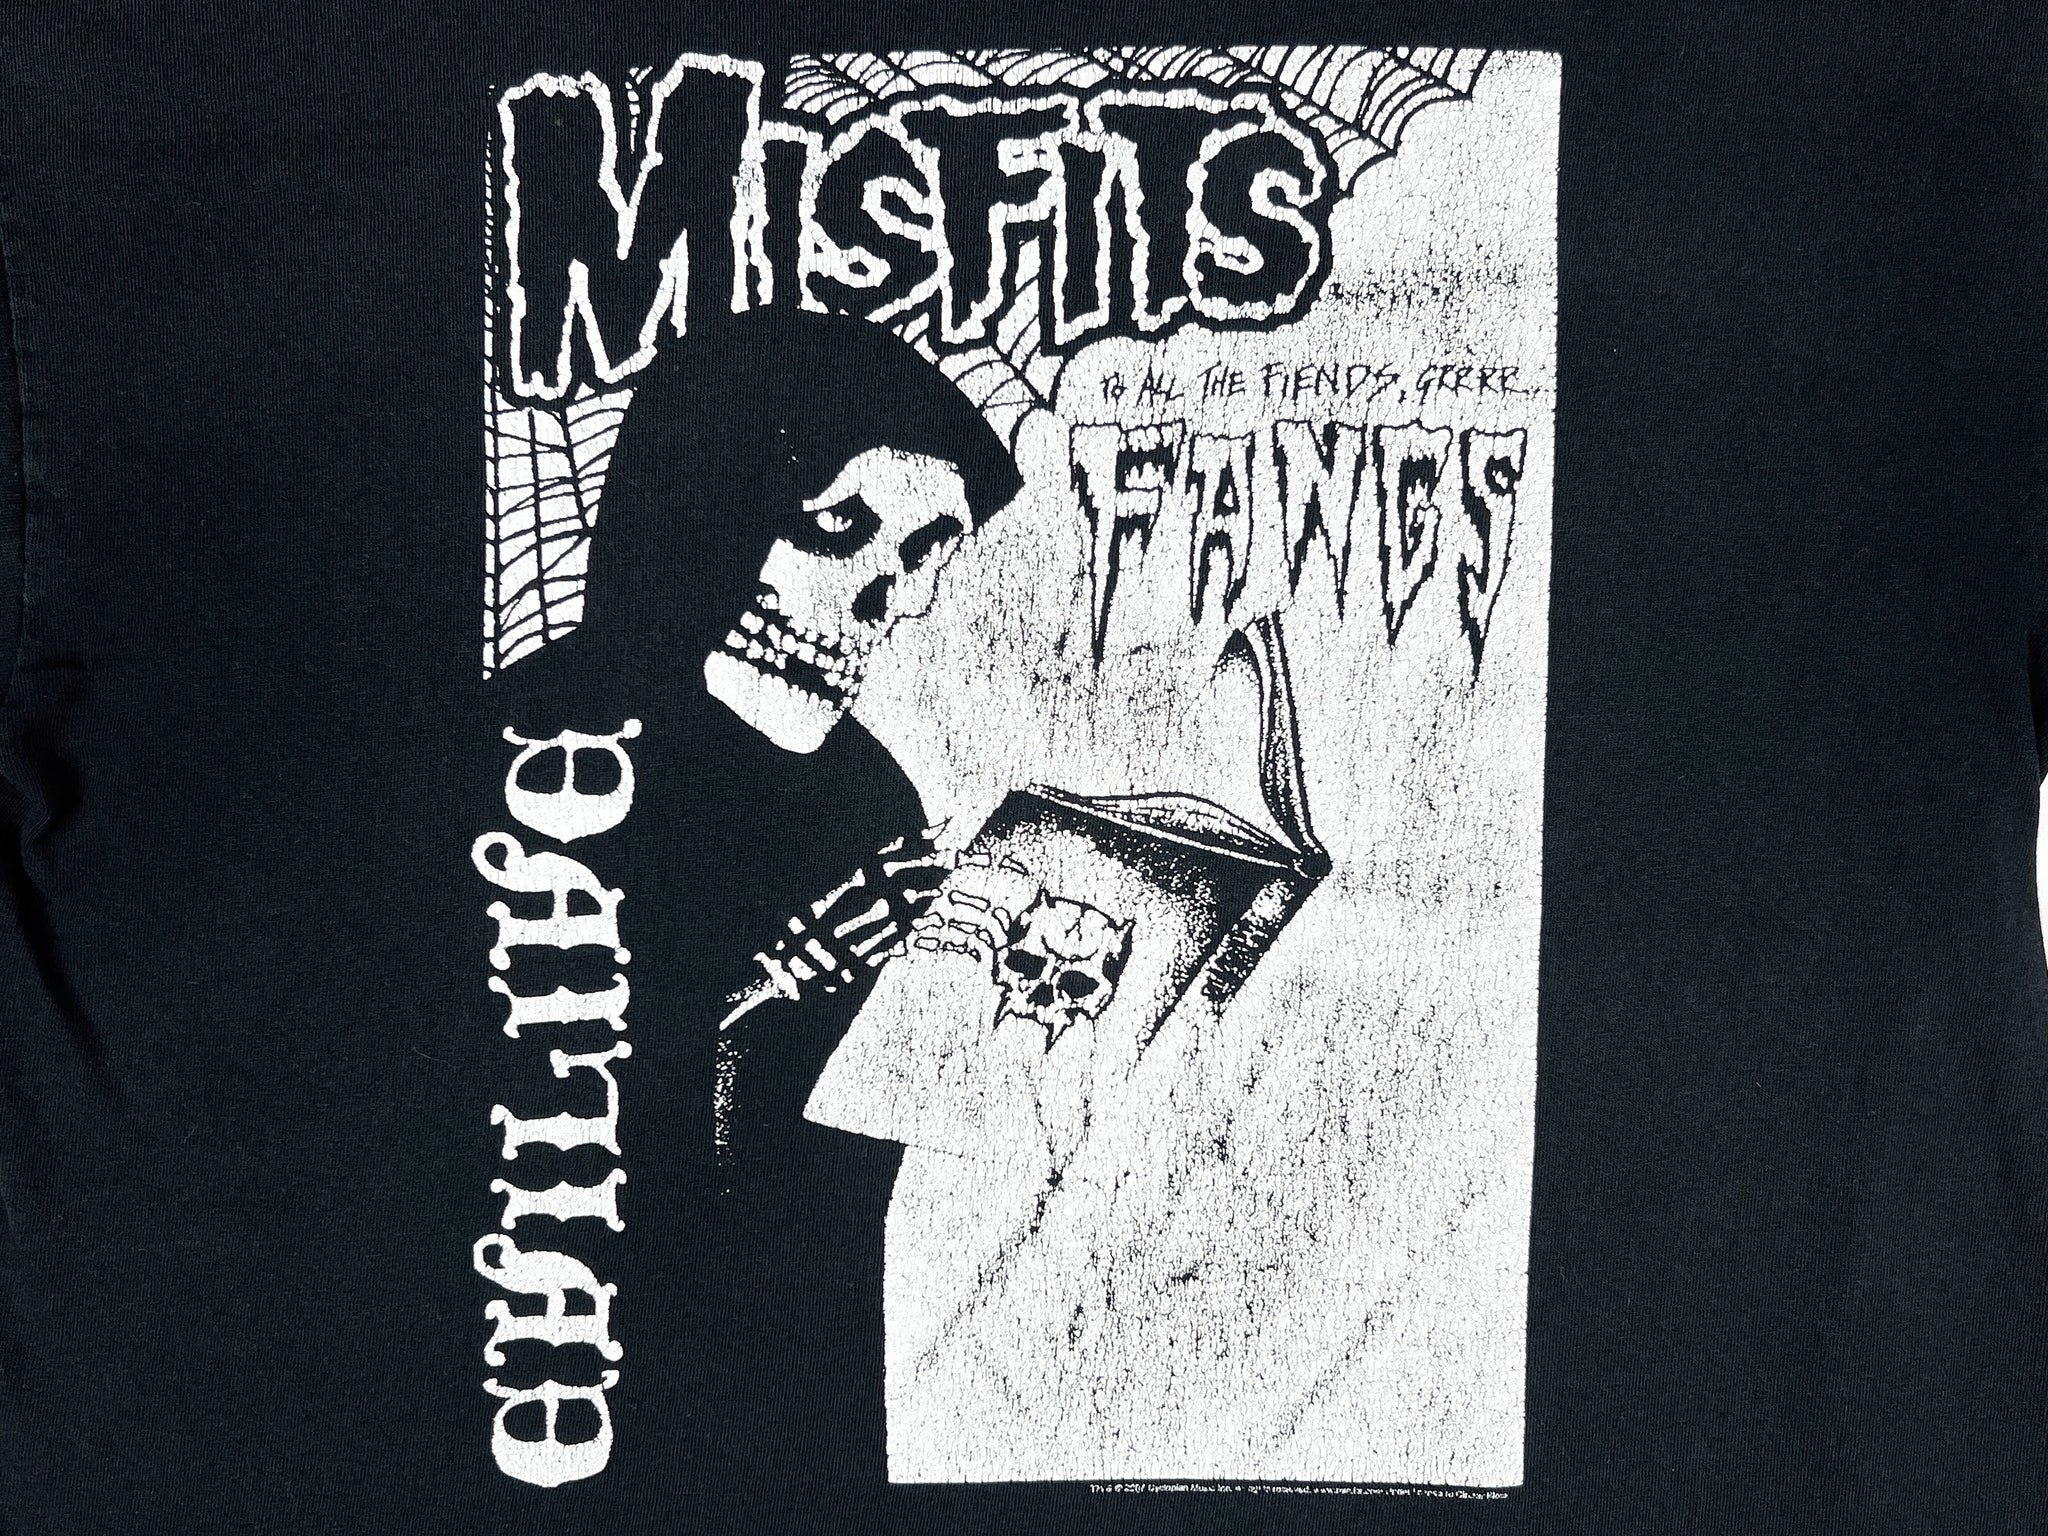 Misfits 'Fangs' T-Shirt